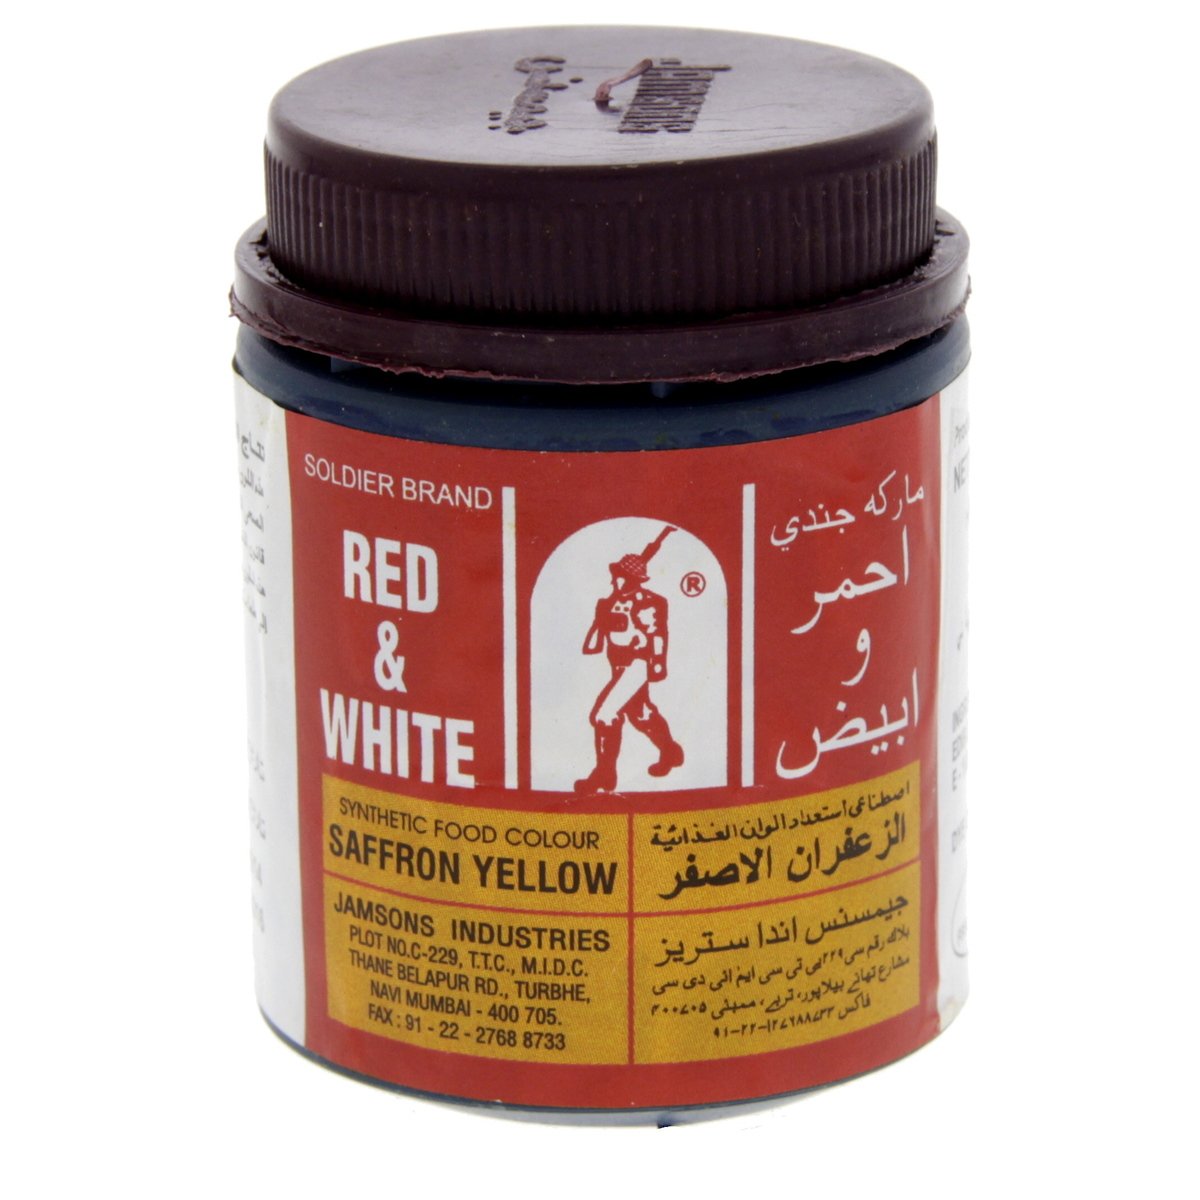 Red & White Food Colour Saffron Yellow 100 g